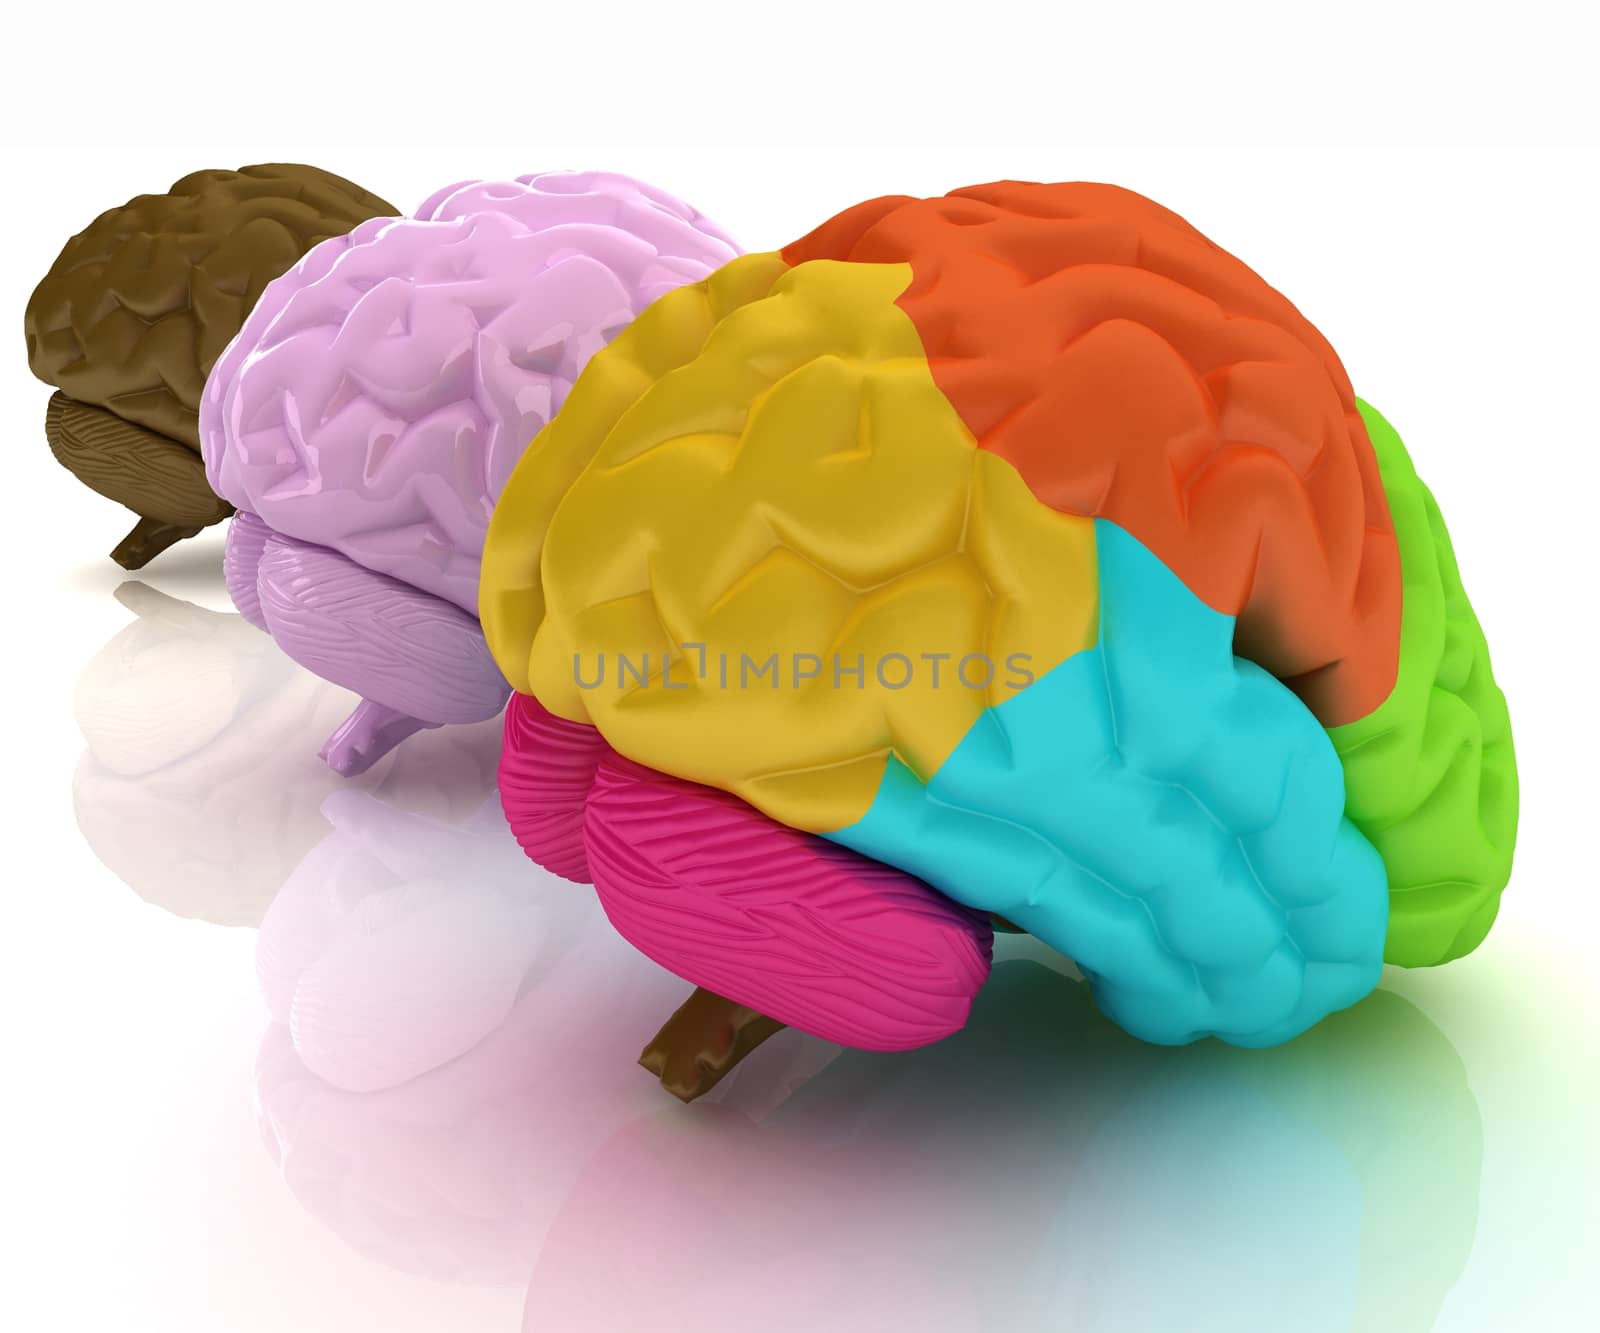 Human brains by Guru3D